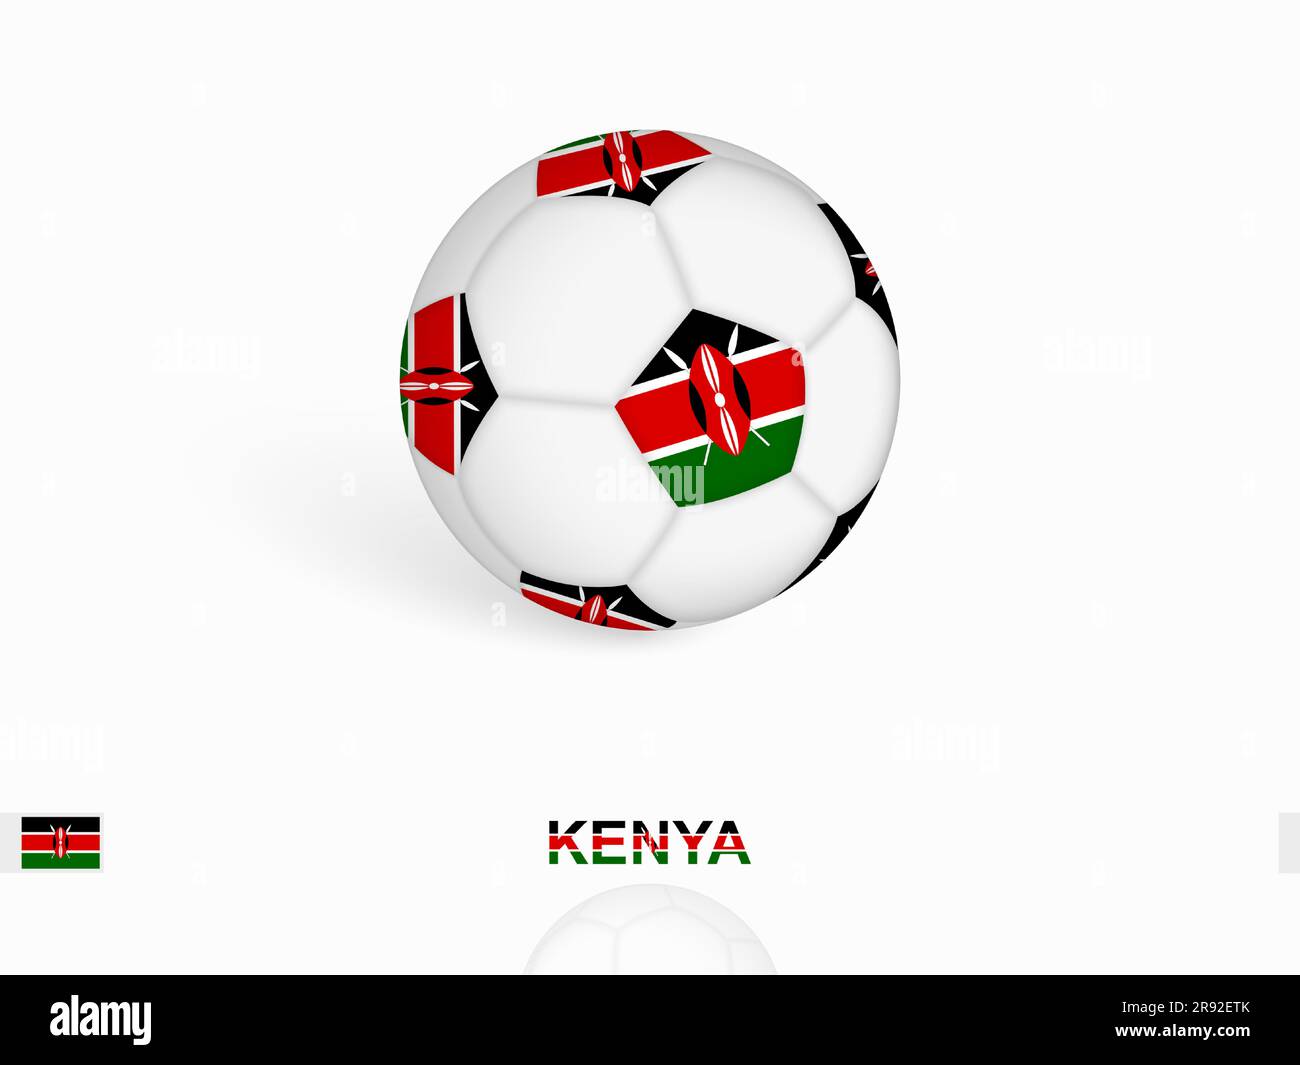 Soccer ball with the Kenya flag, football sport equipment. Vector illustration. Stock Vector